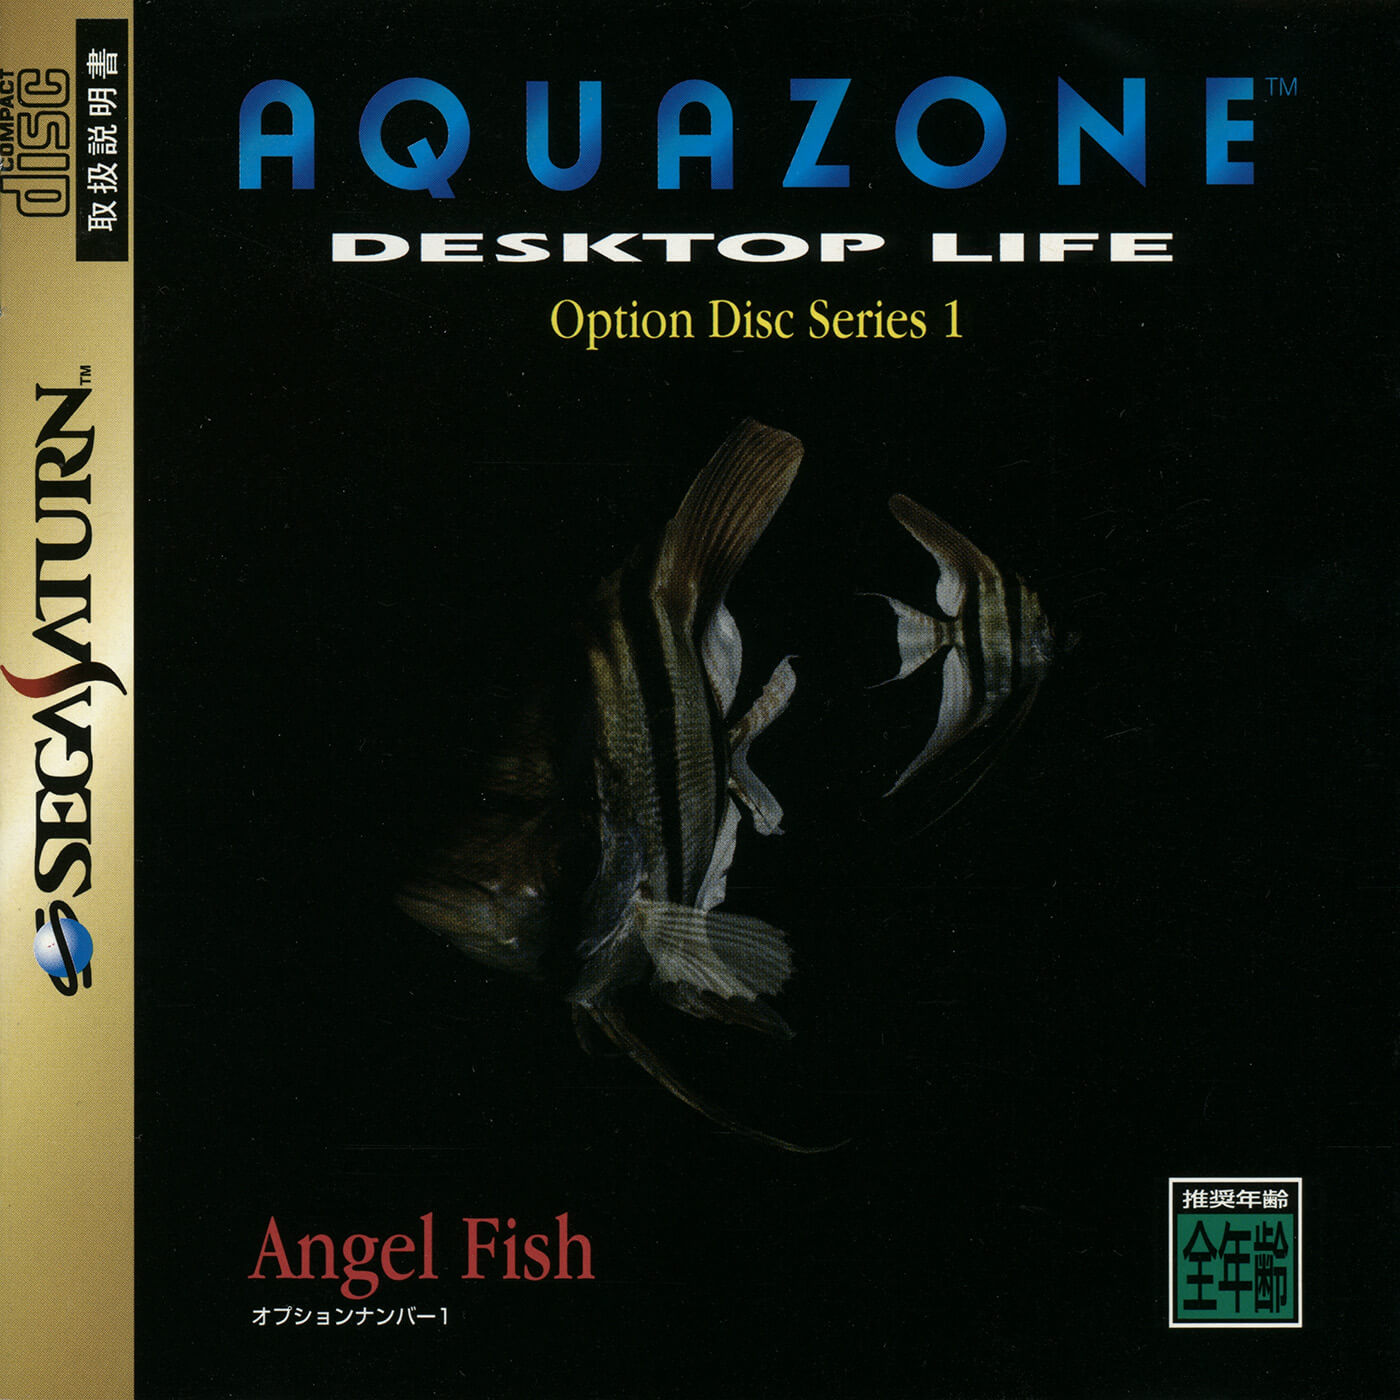 Aquazone: Desktop Life Option Disc Series 1: Angel Fish